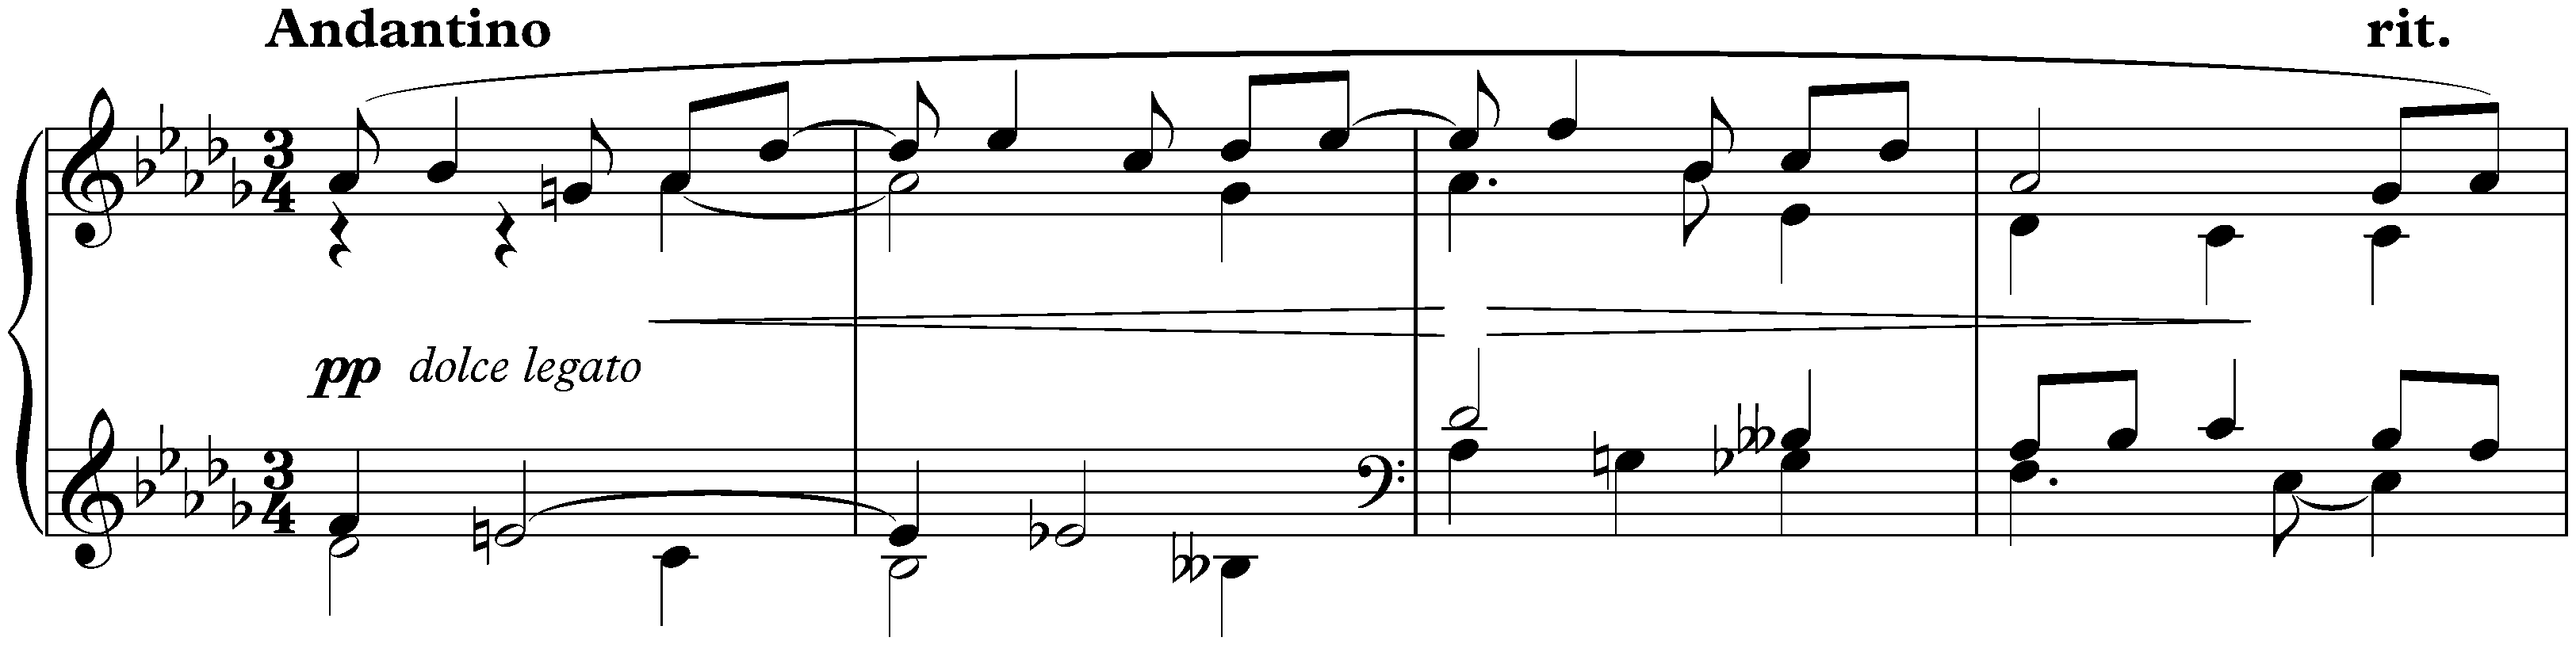 Nine Preludes, op. 1; 3. Andantino